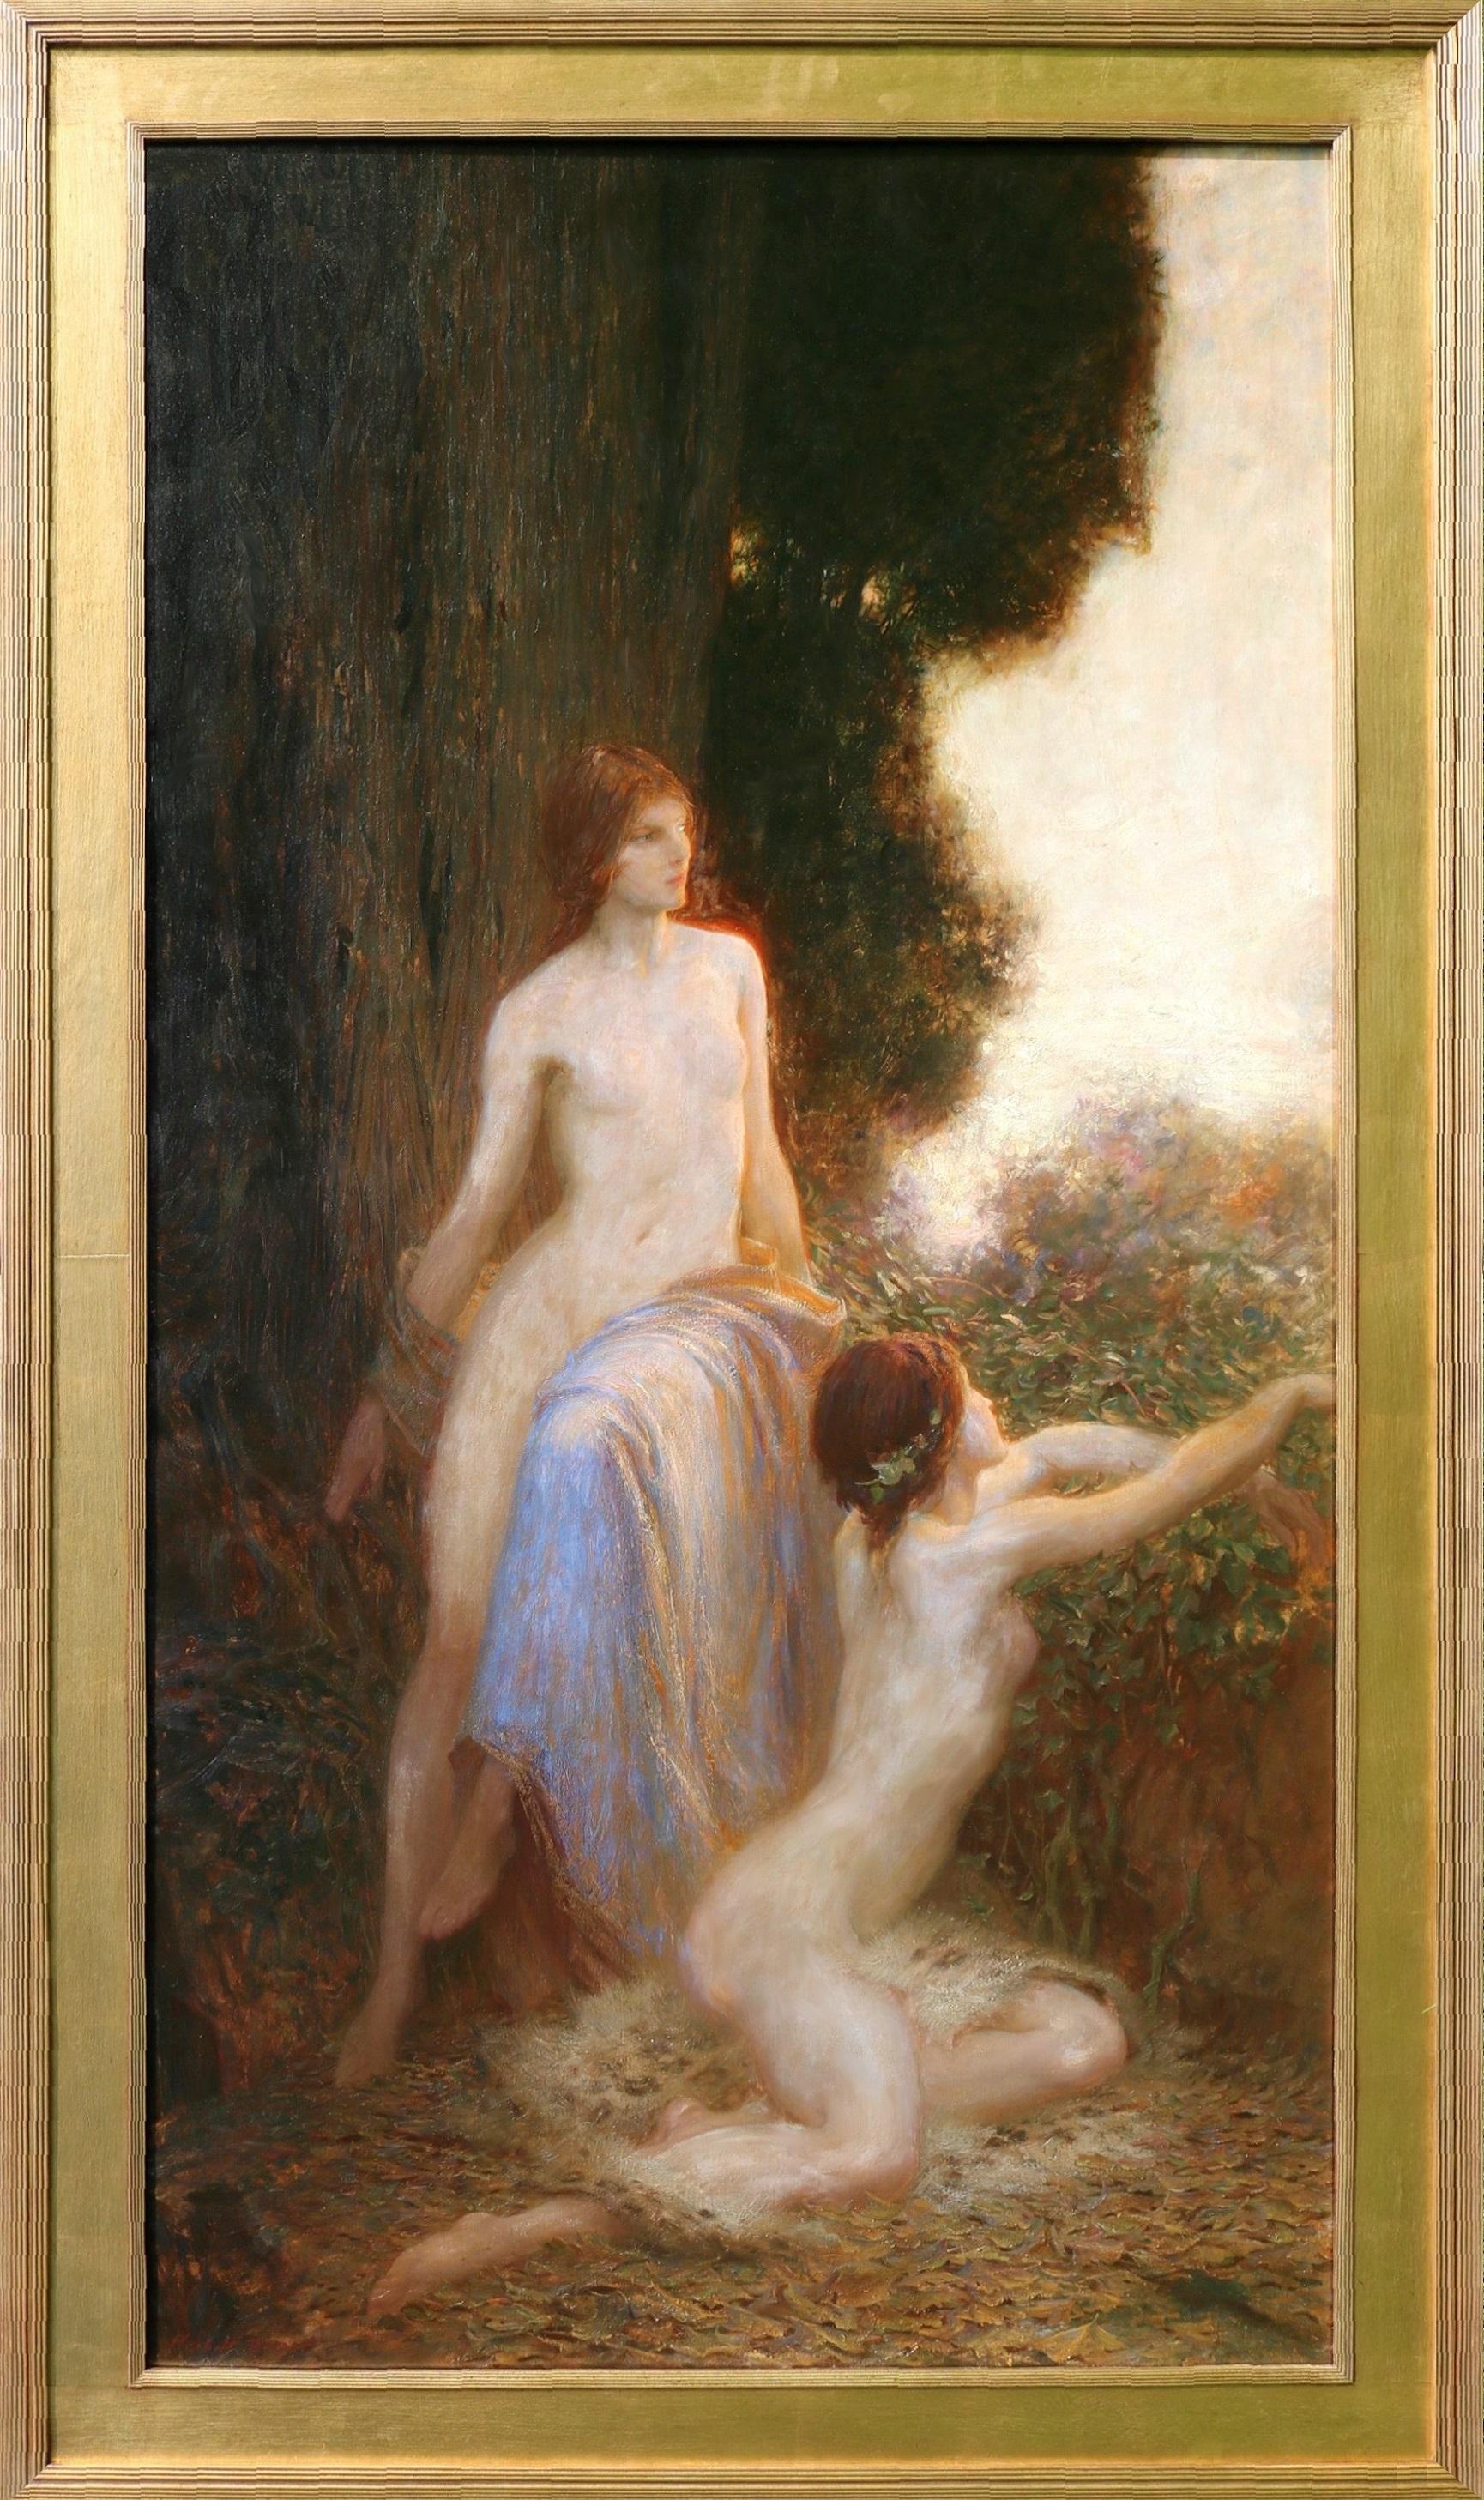 Awakening - Monumental Royal Academy Oil Painting of Neoclassical Nudes Nymphs  - Brown Nude Painting by Herbert James Draper 